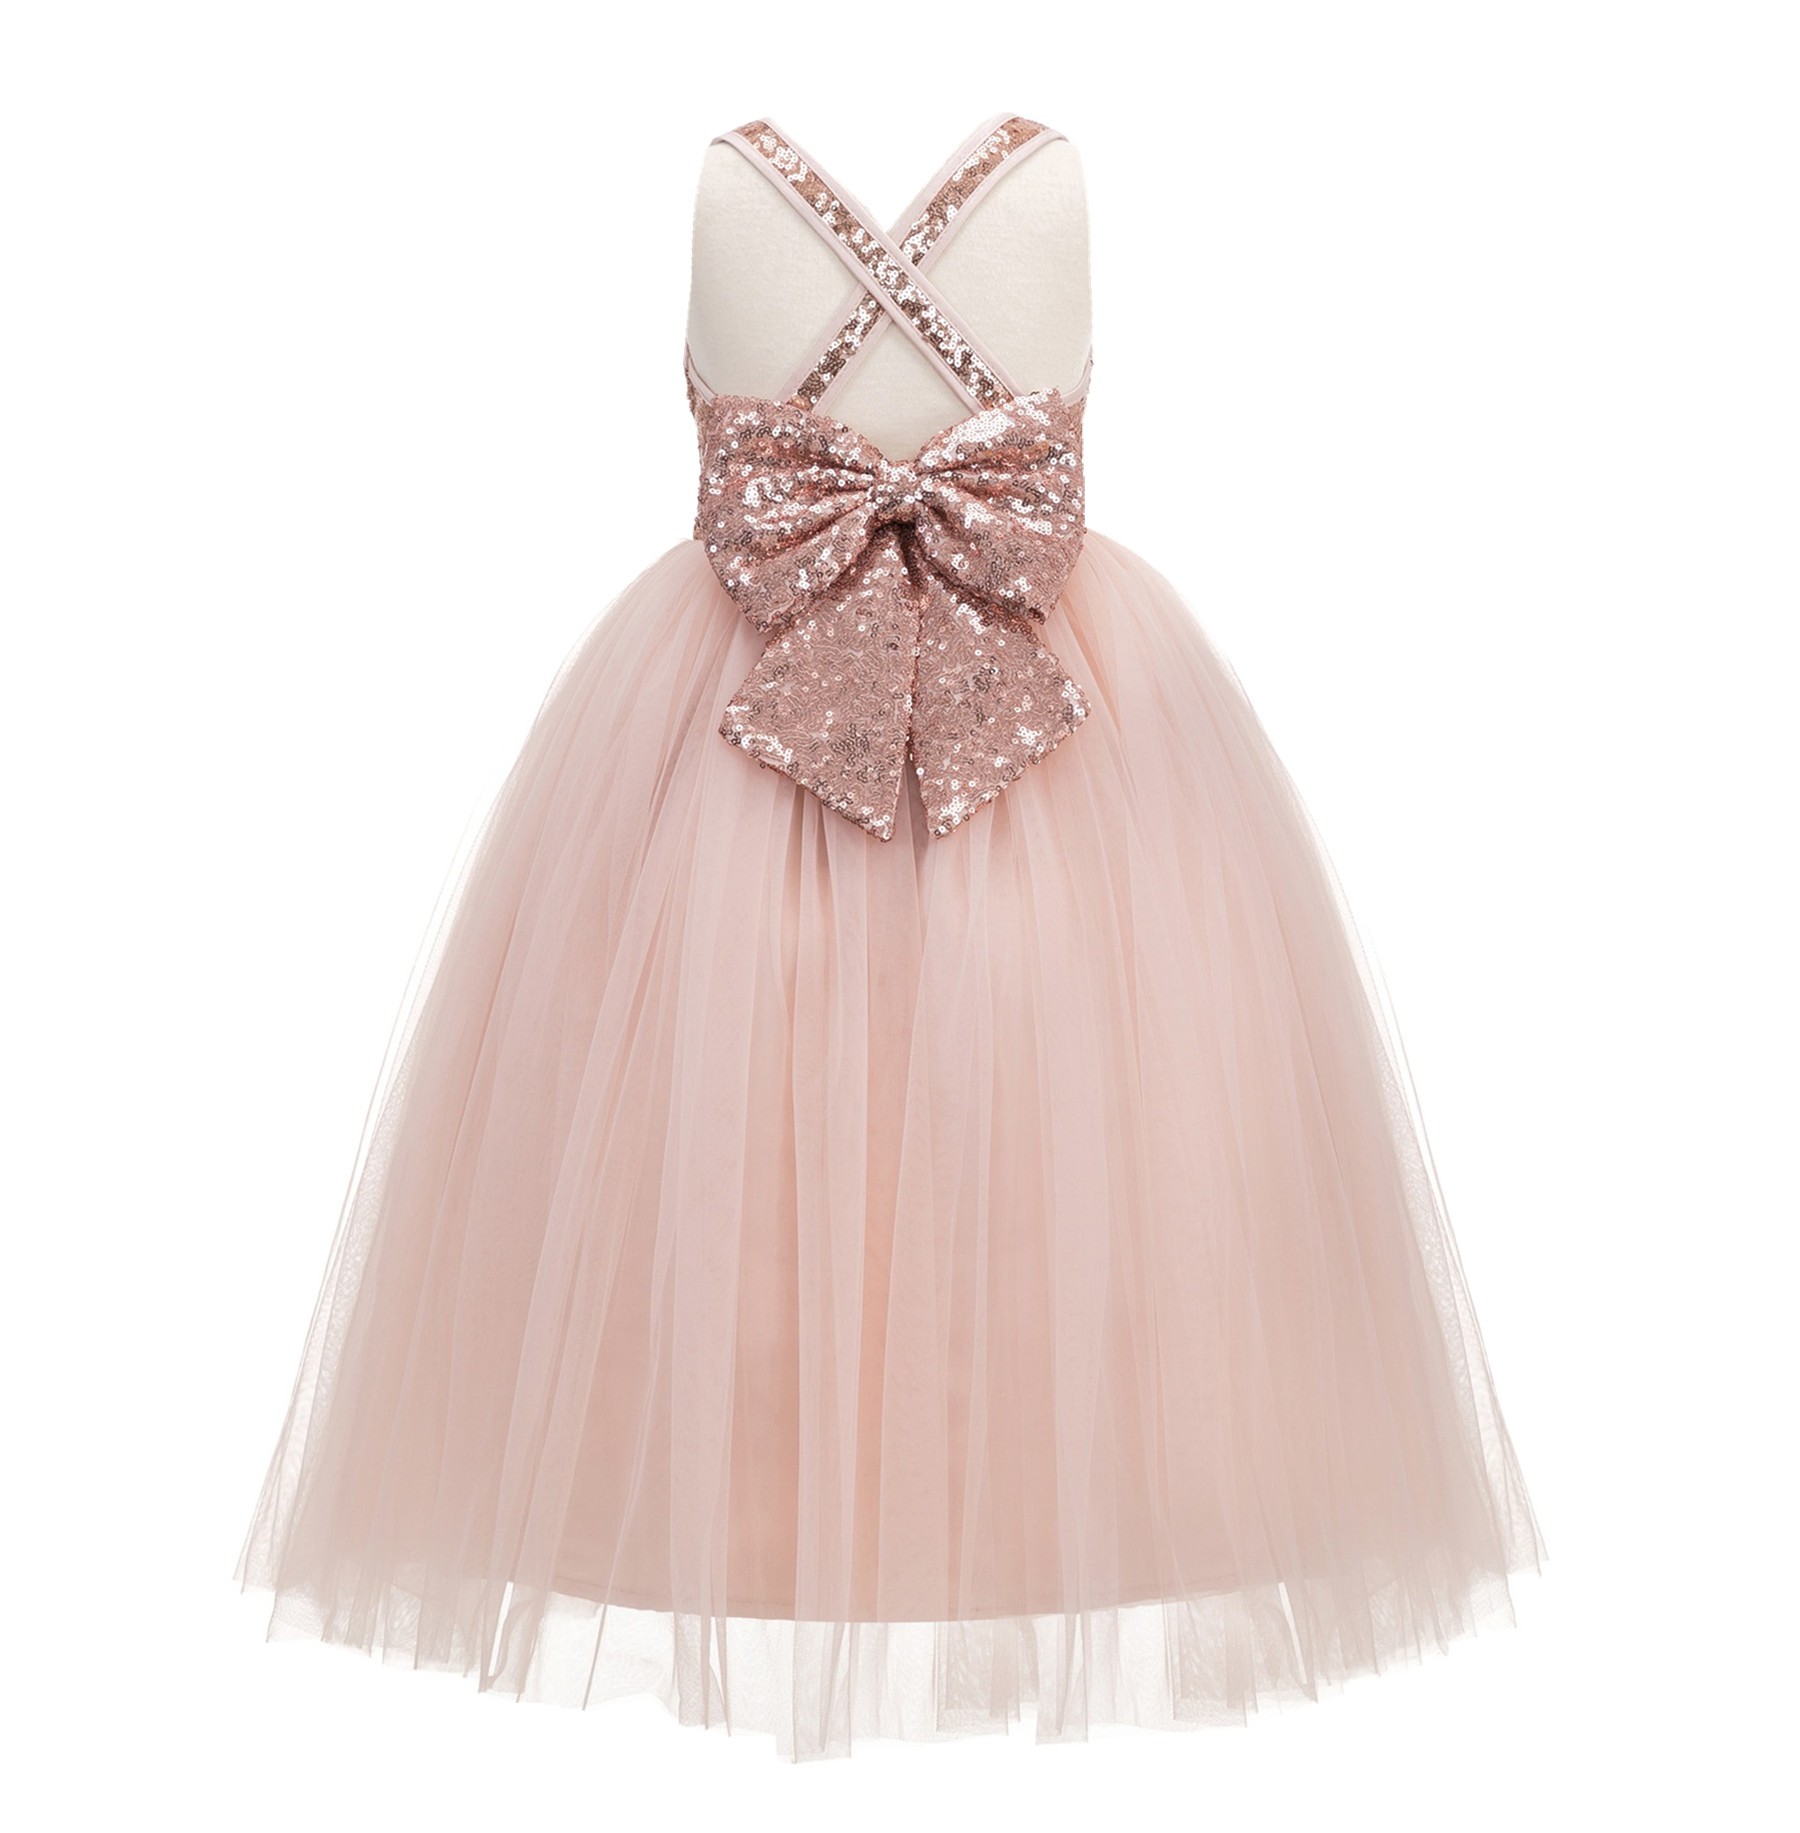 Rose Gold / Blush Pink Crossed Straps A-Line Flower Girl Dress 177